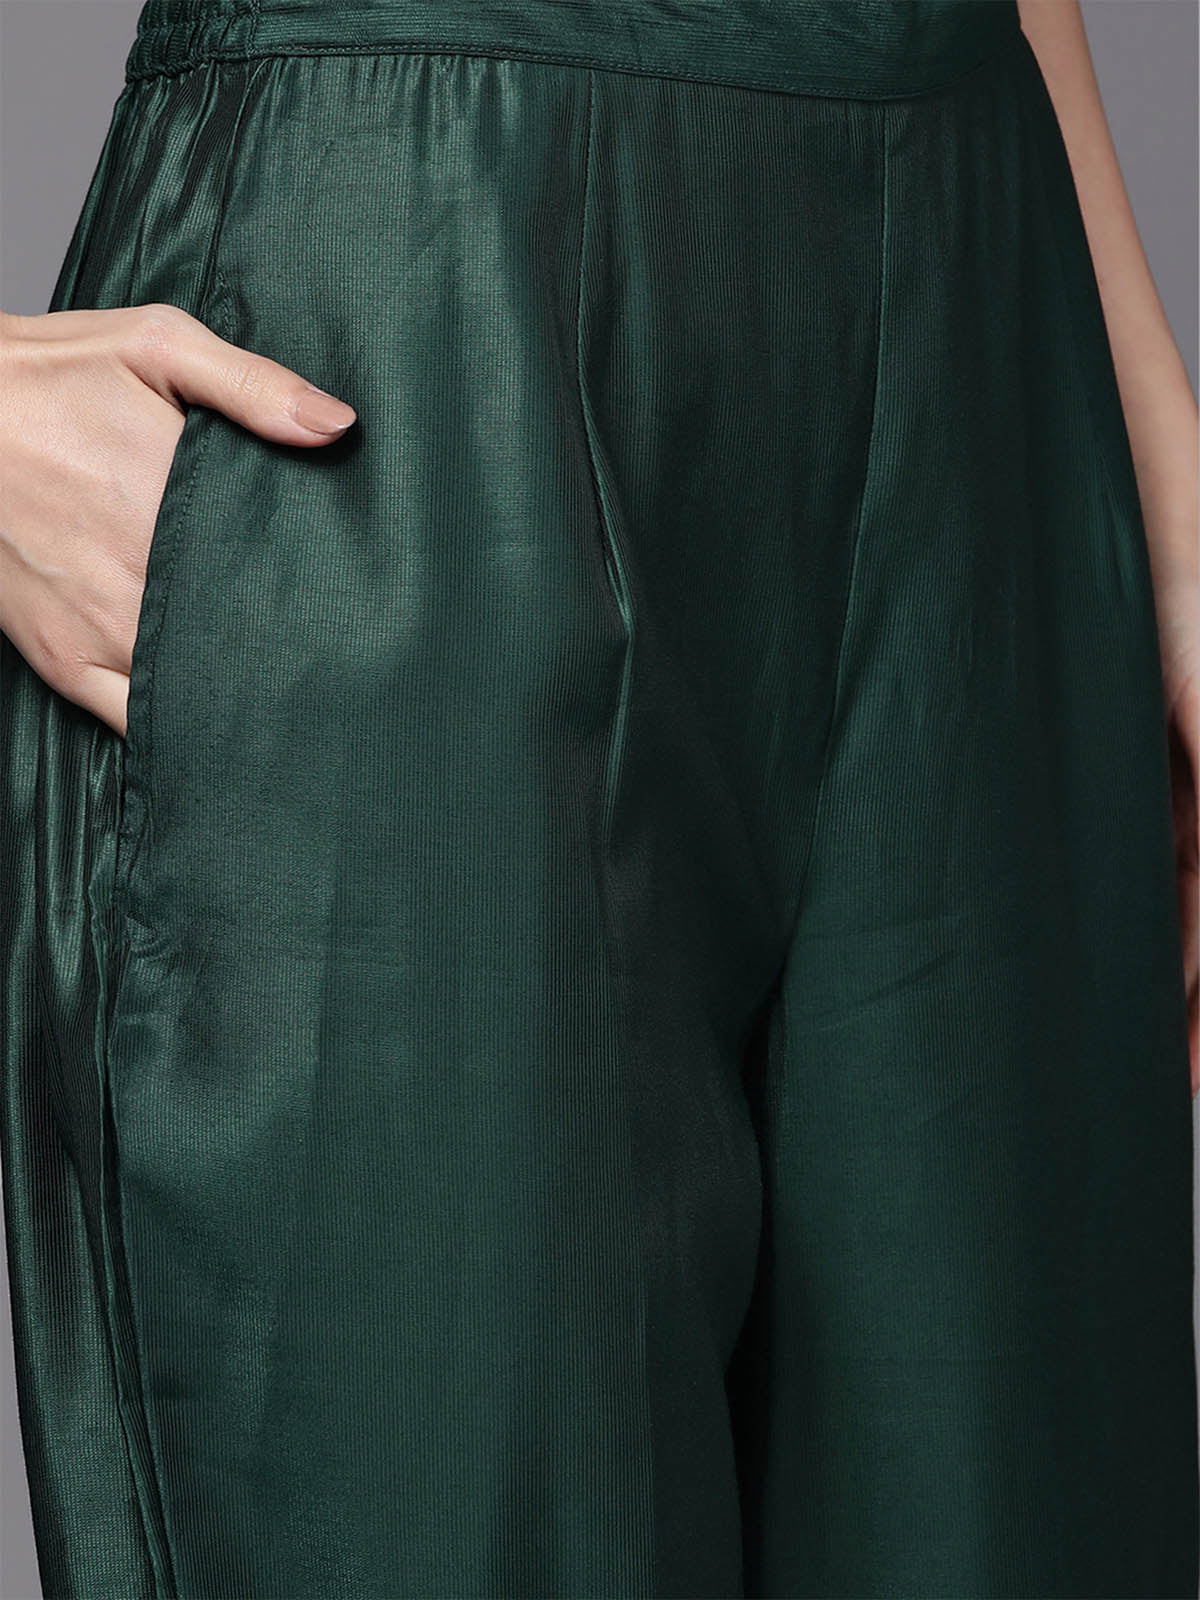 Women's Teal Embroidered Straight Kurta Trouser Set - Odette